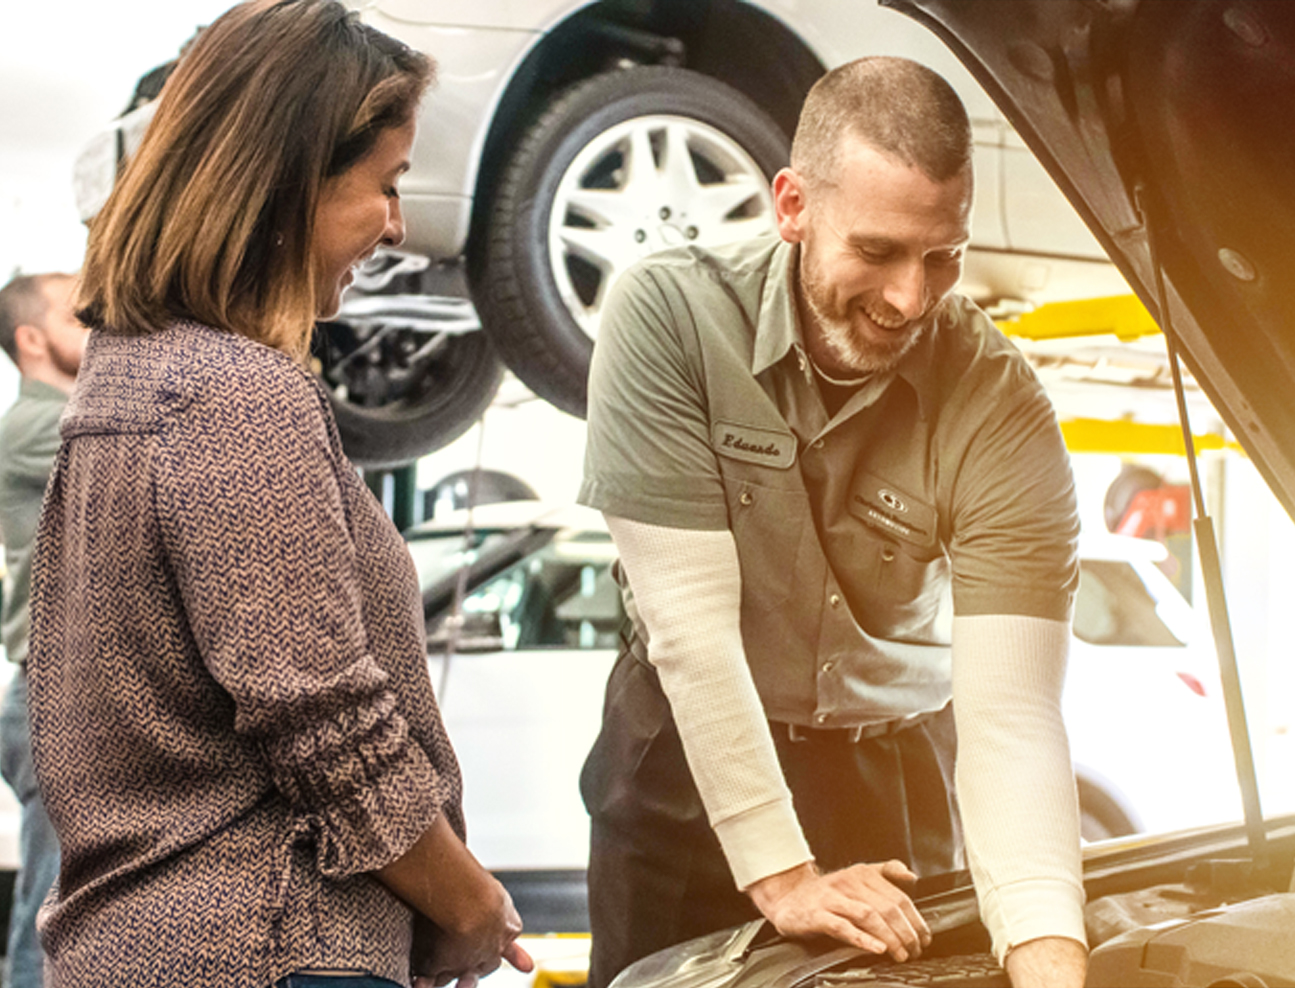 An Oviedo Mechanic Explains an Auto Repair Service to a Customer